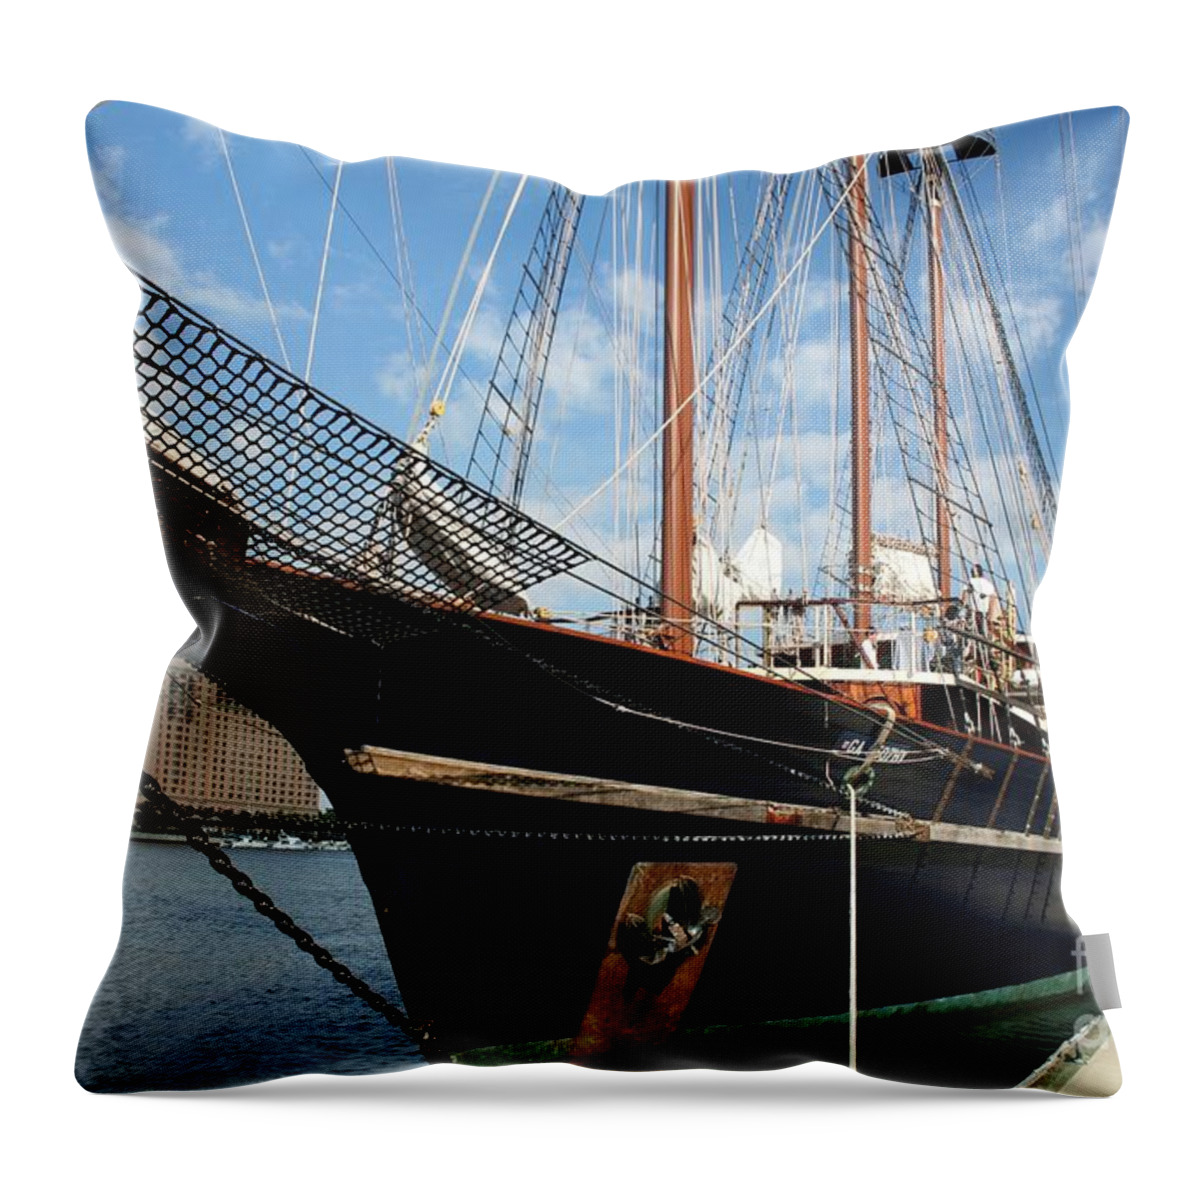 Sailing Ship Throw Pillow featuring the photograph Savannah Waterfront by John Black